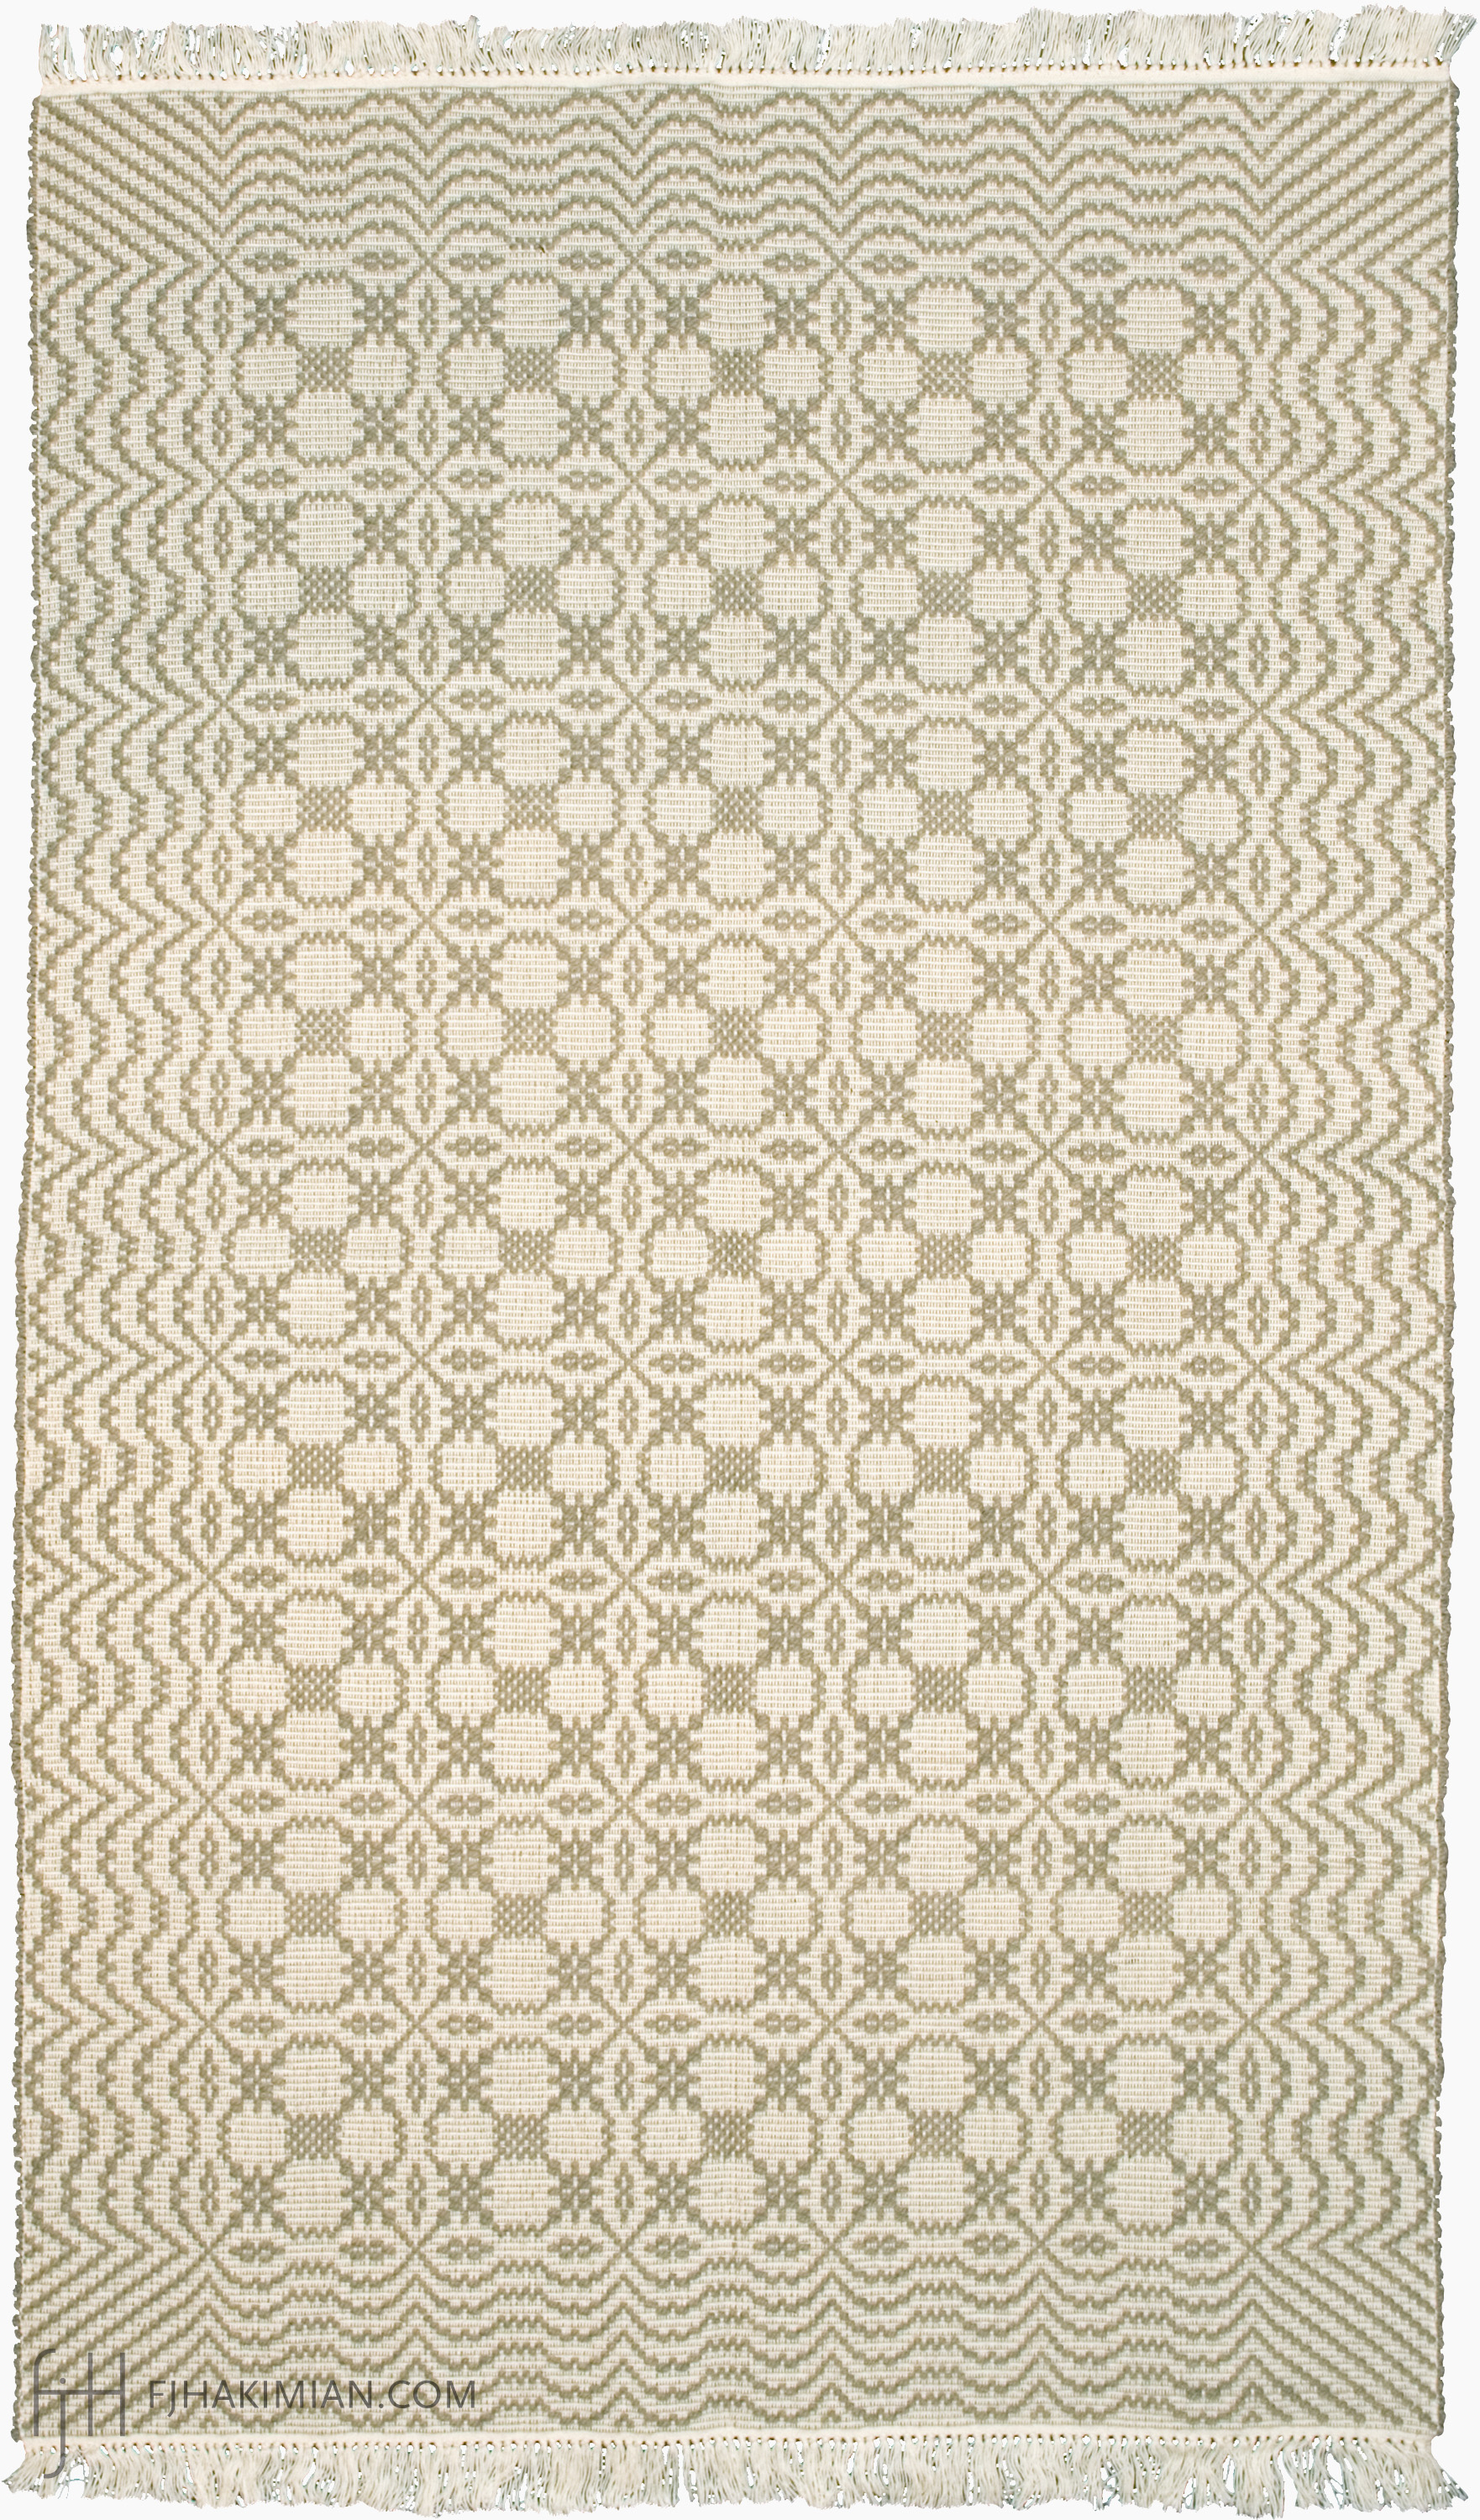 SIS-104 | IF-104 Design | Custom Sardinian Carpet | FJ Hakimian | Carpet Gallery in NYC